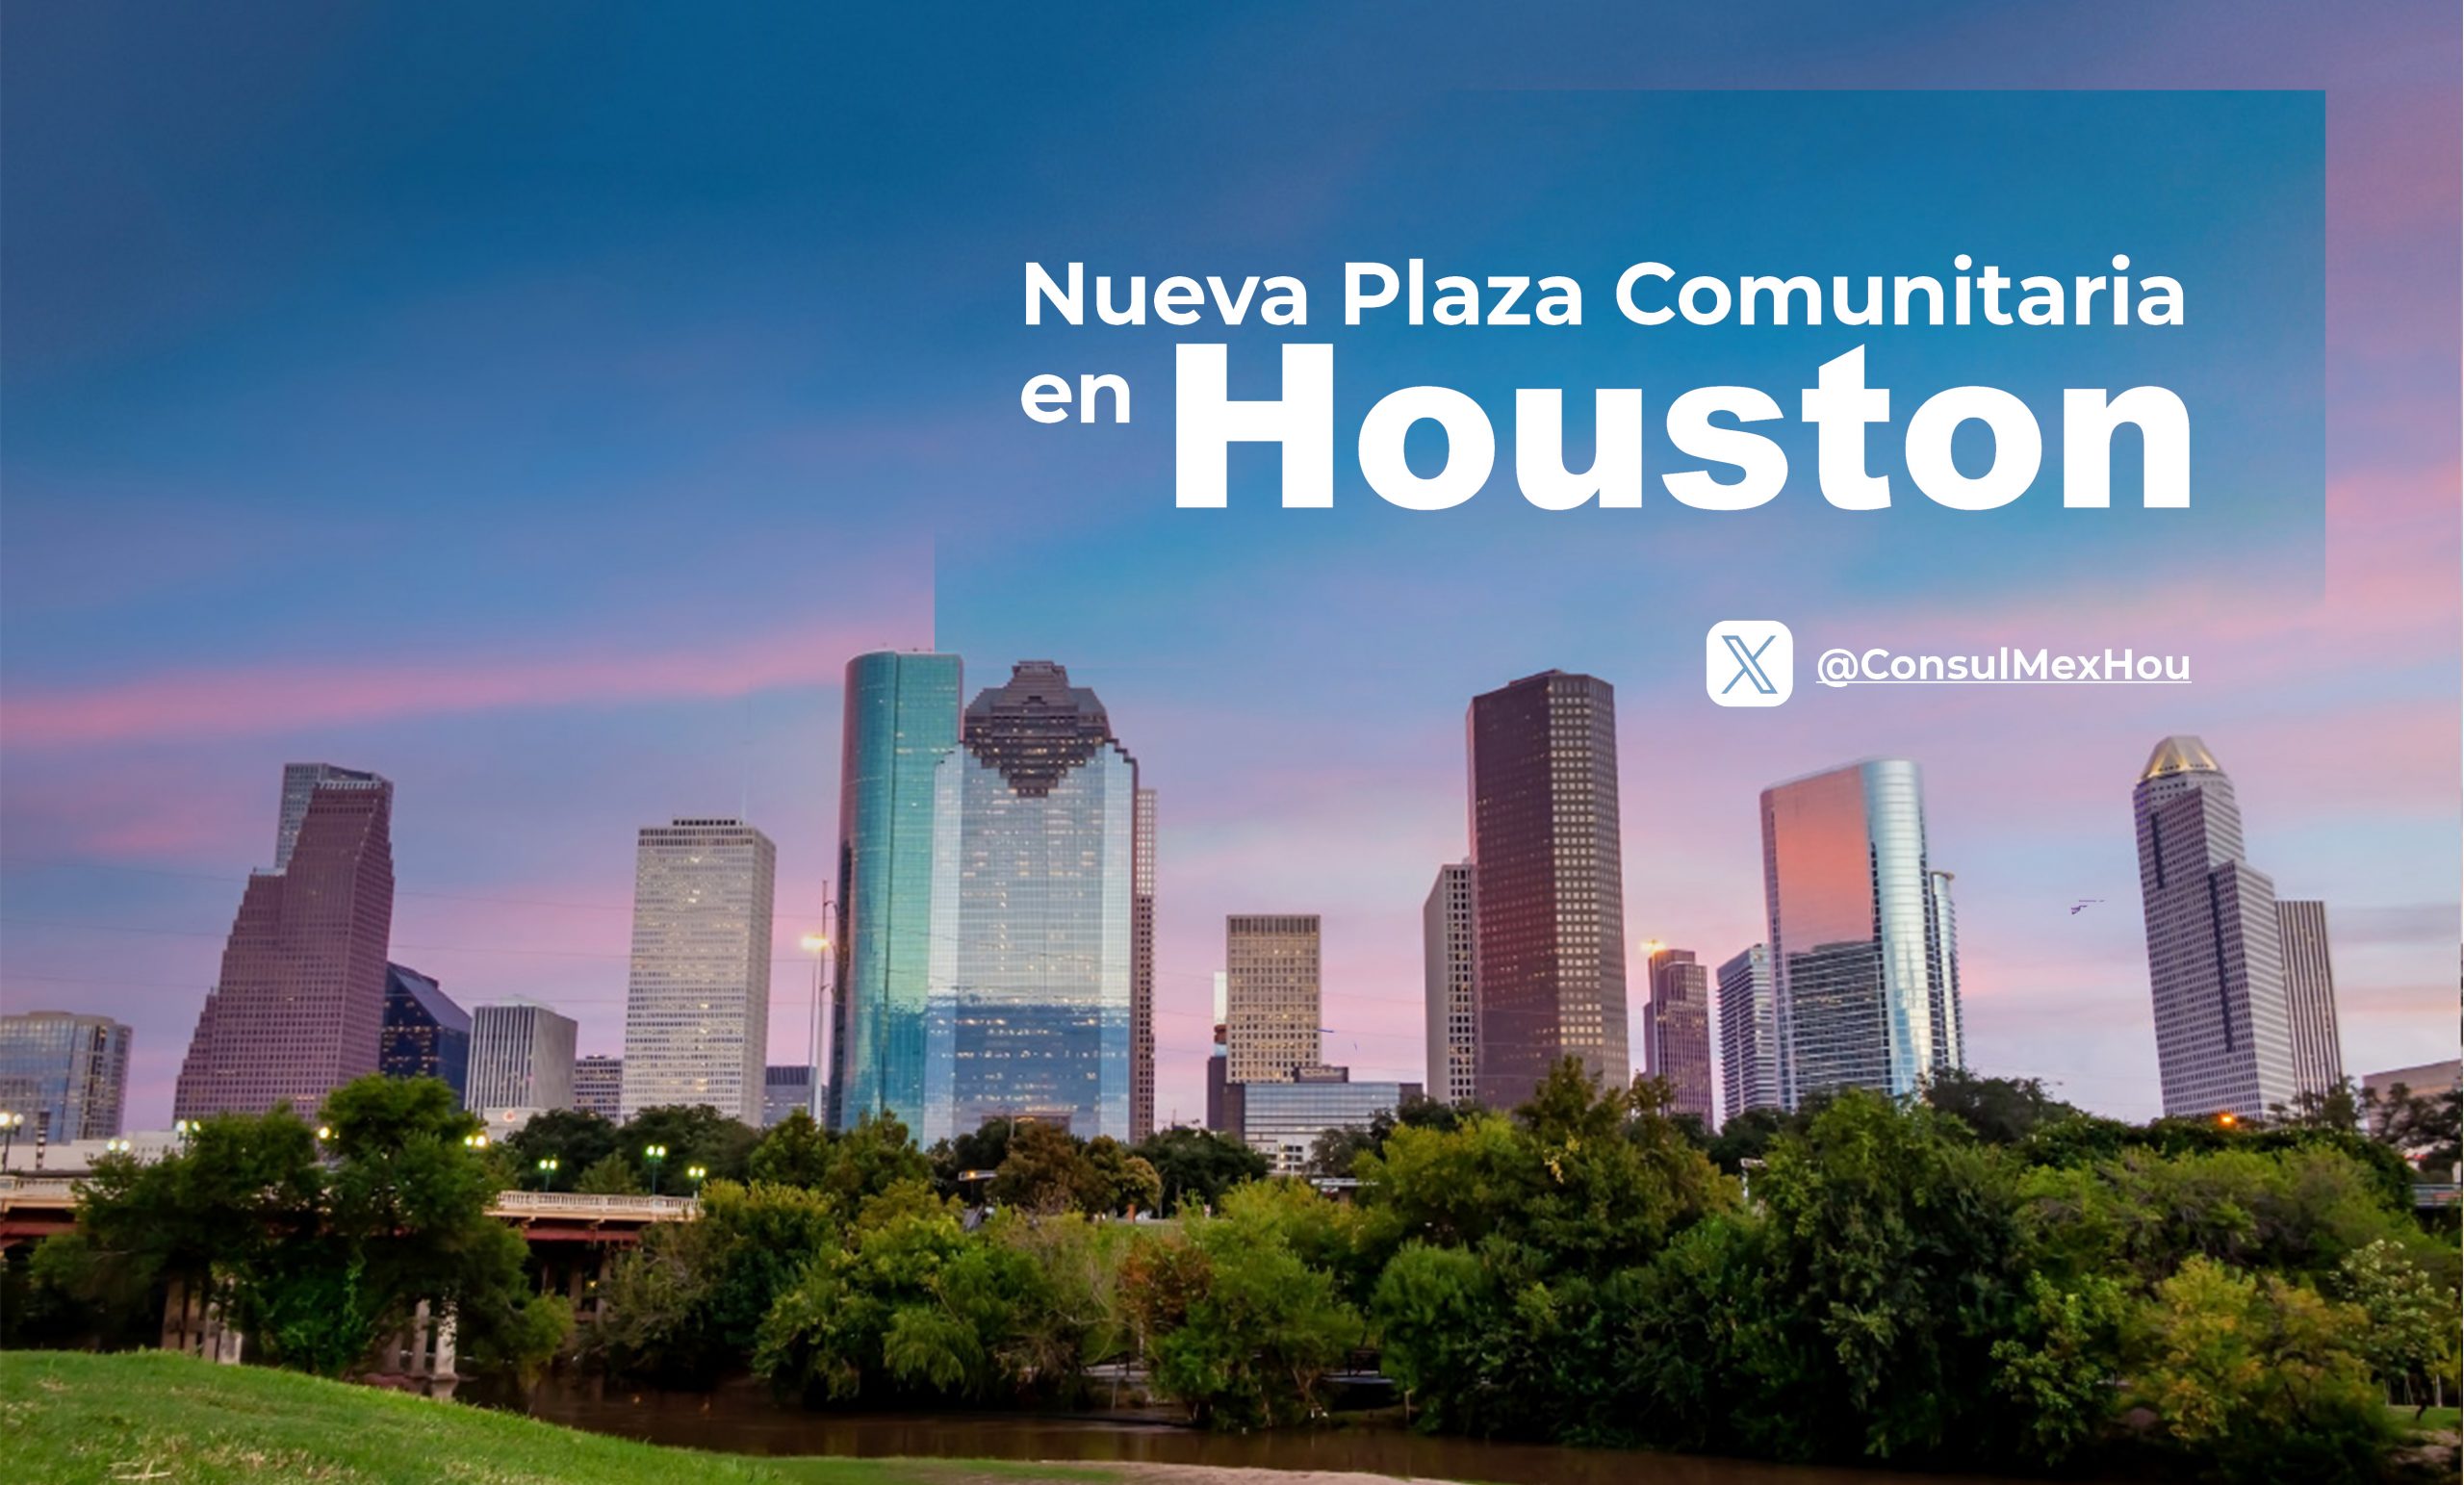 Nueva Plaza Comunitaria en Houston